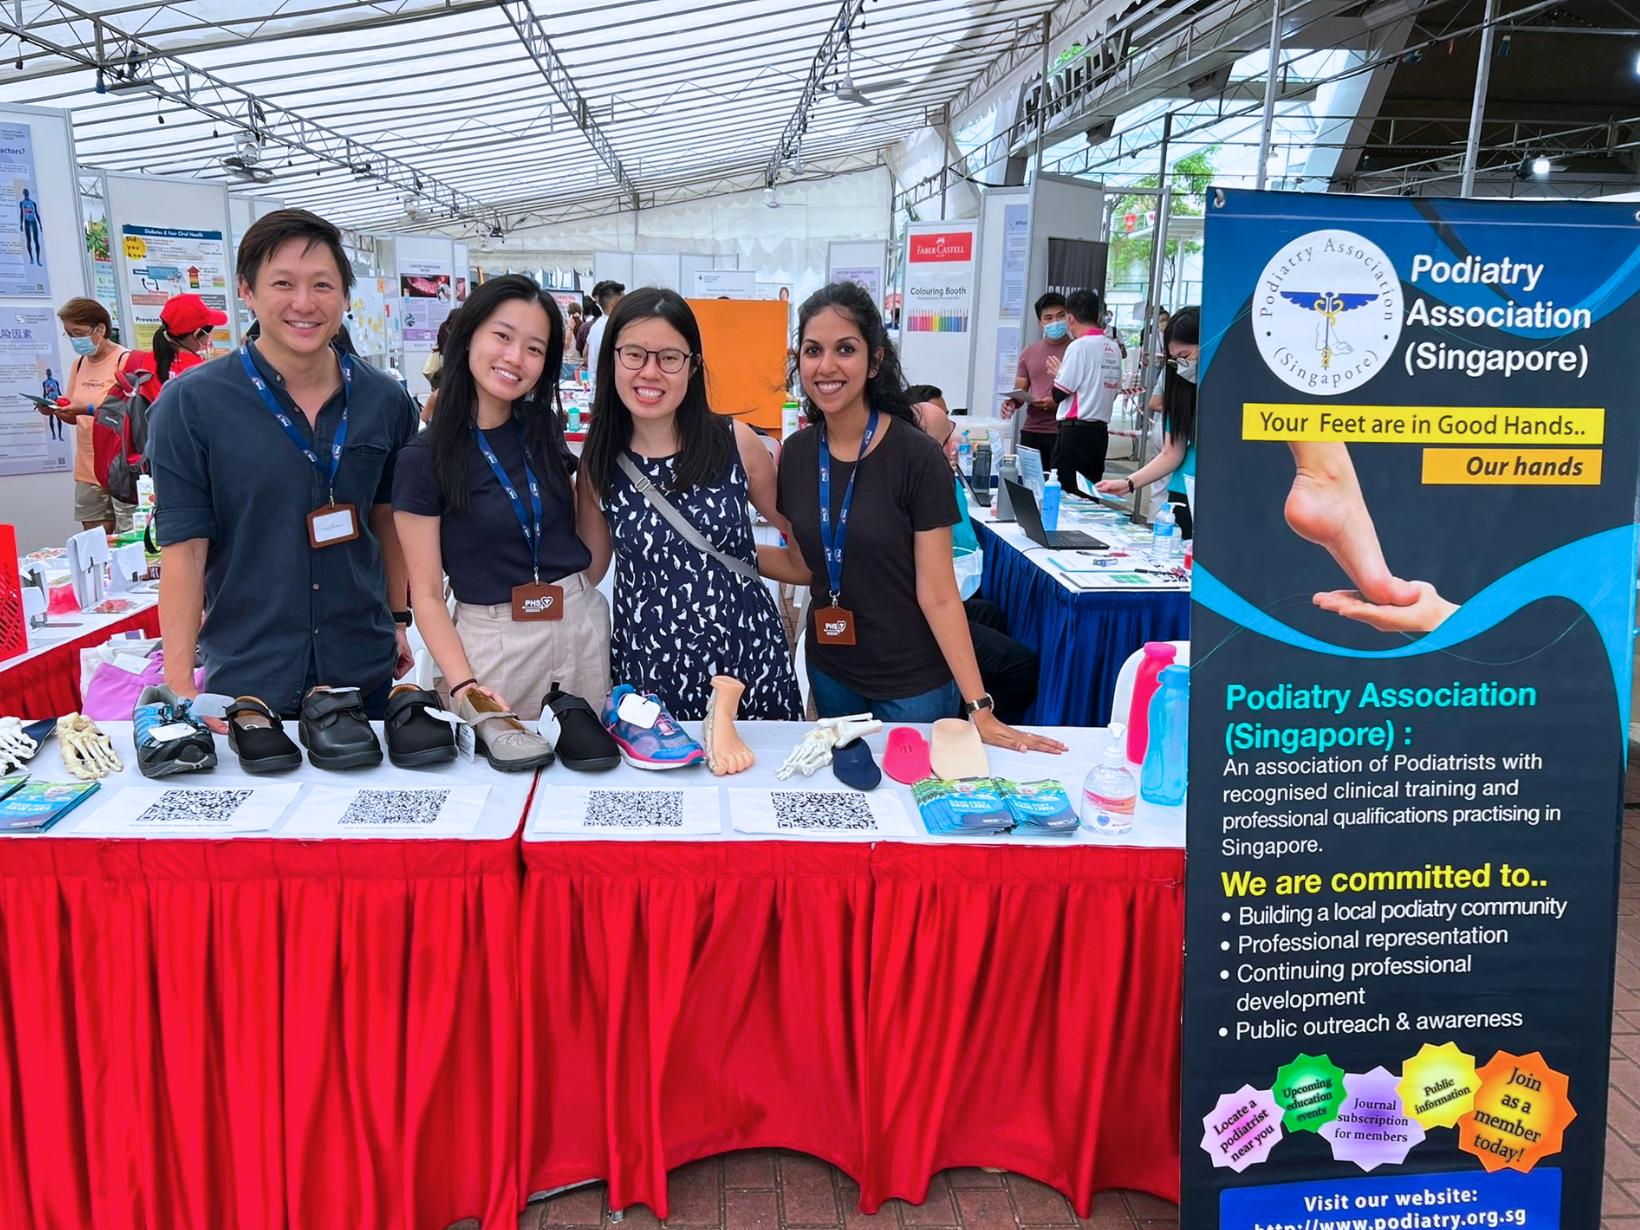 Podiatry Association (Singapore) volunteering